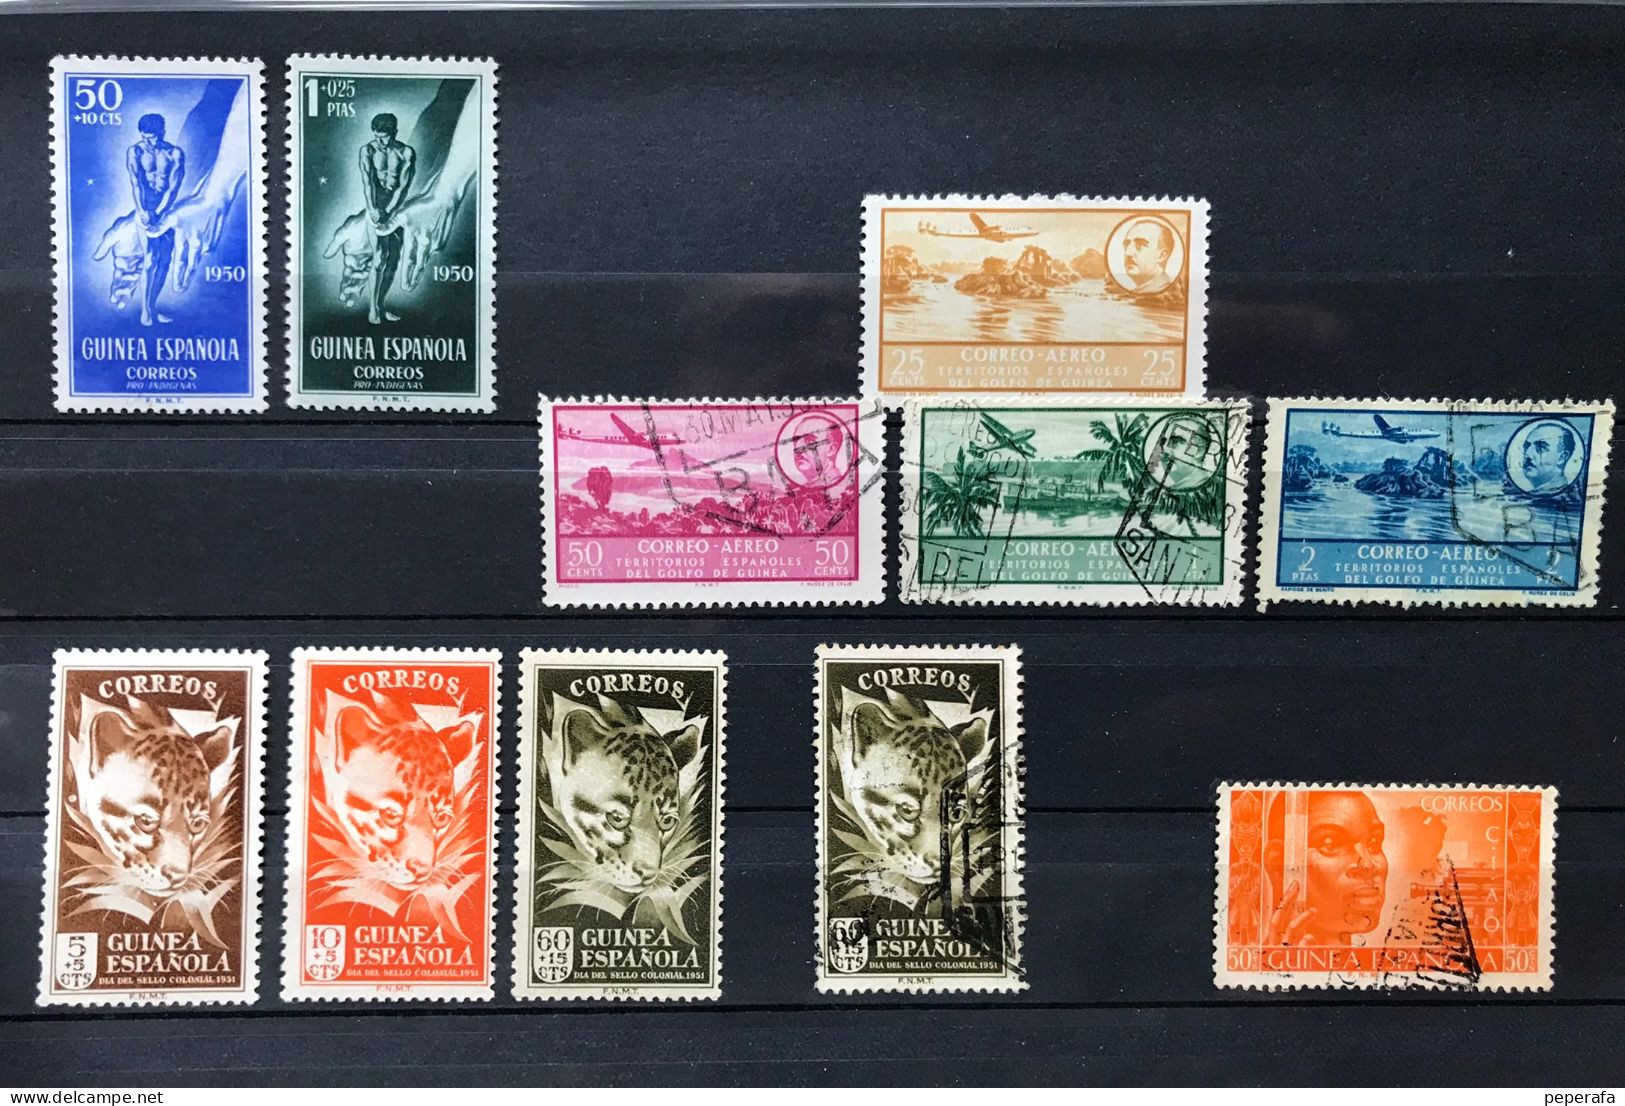 Spain, Spagne, España, GUINEA ESPAÑOLA, GOLFO DE GUINEA 1950, 1951 - Guinea Española